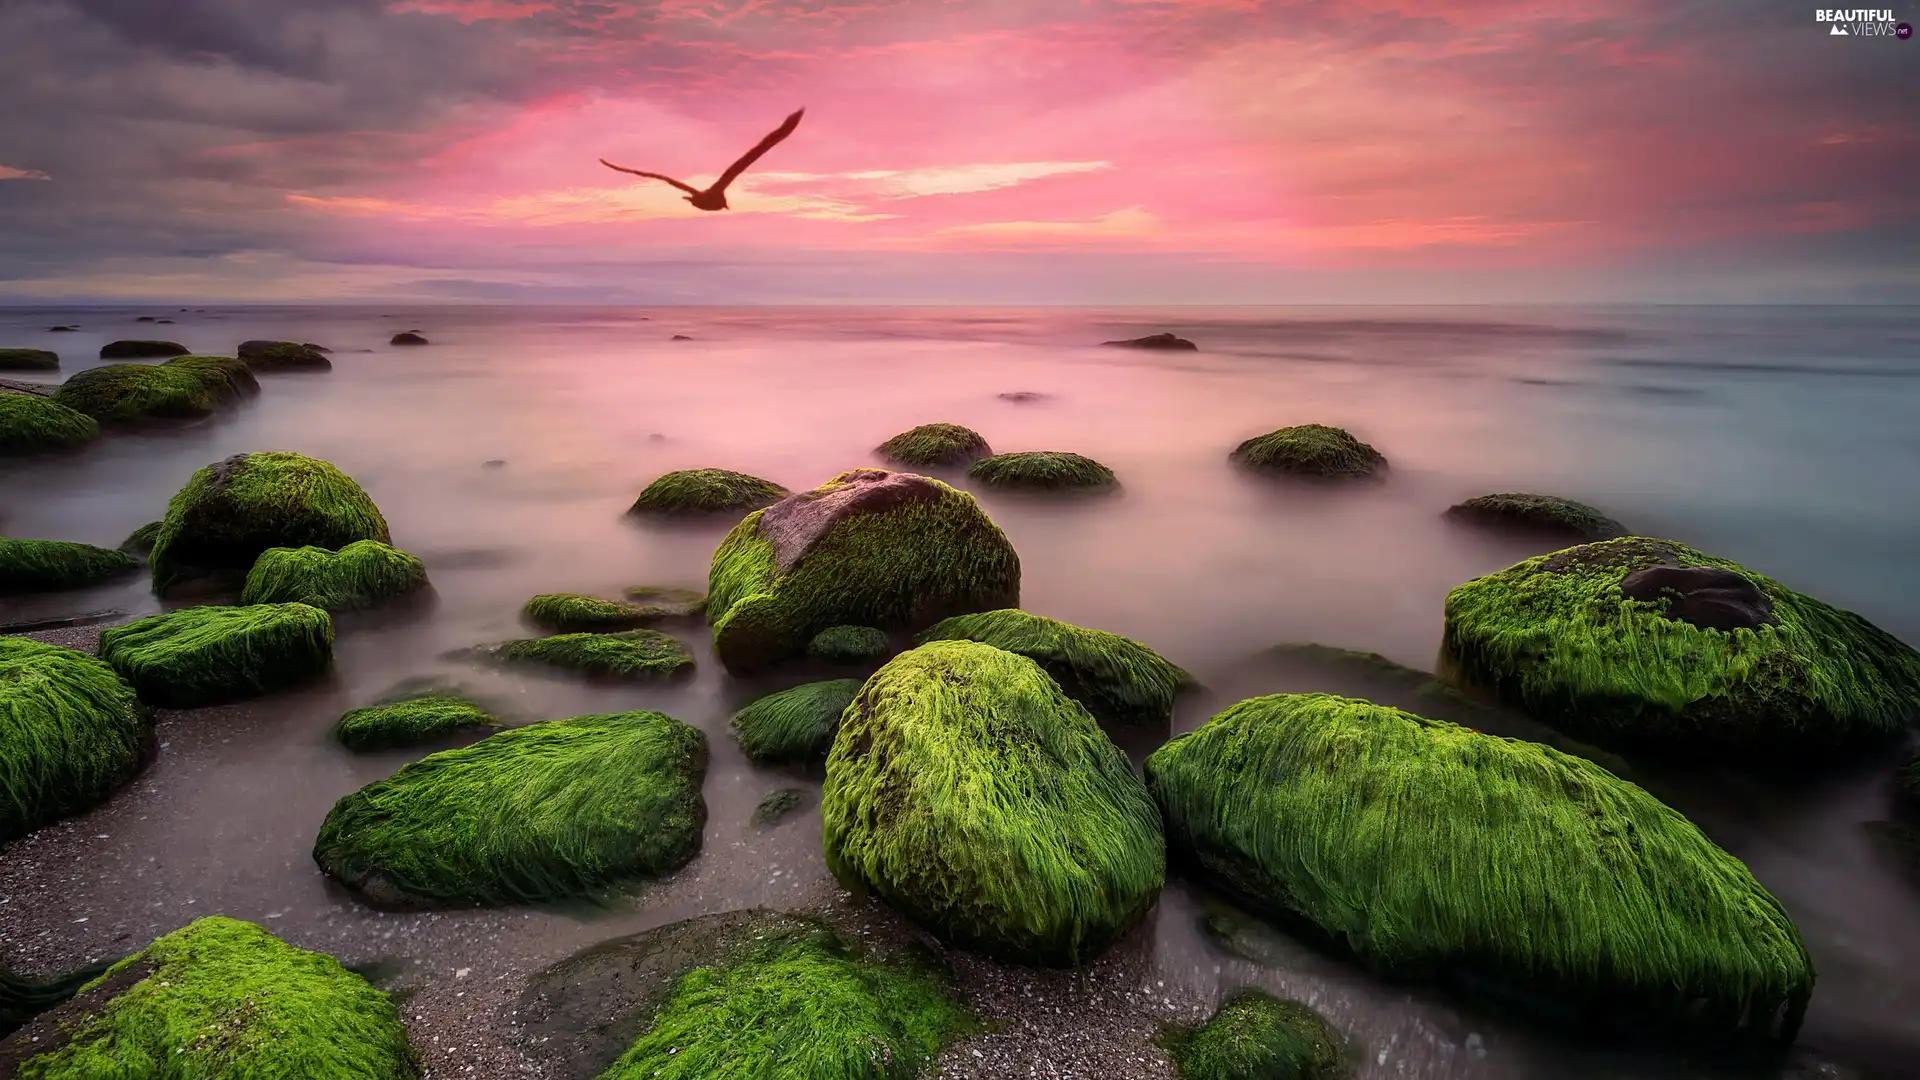 seaweed, Bird, Great Sunsets, Stones, sea